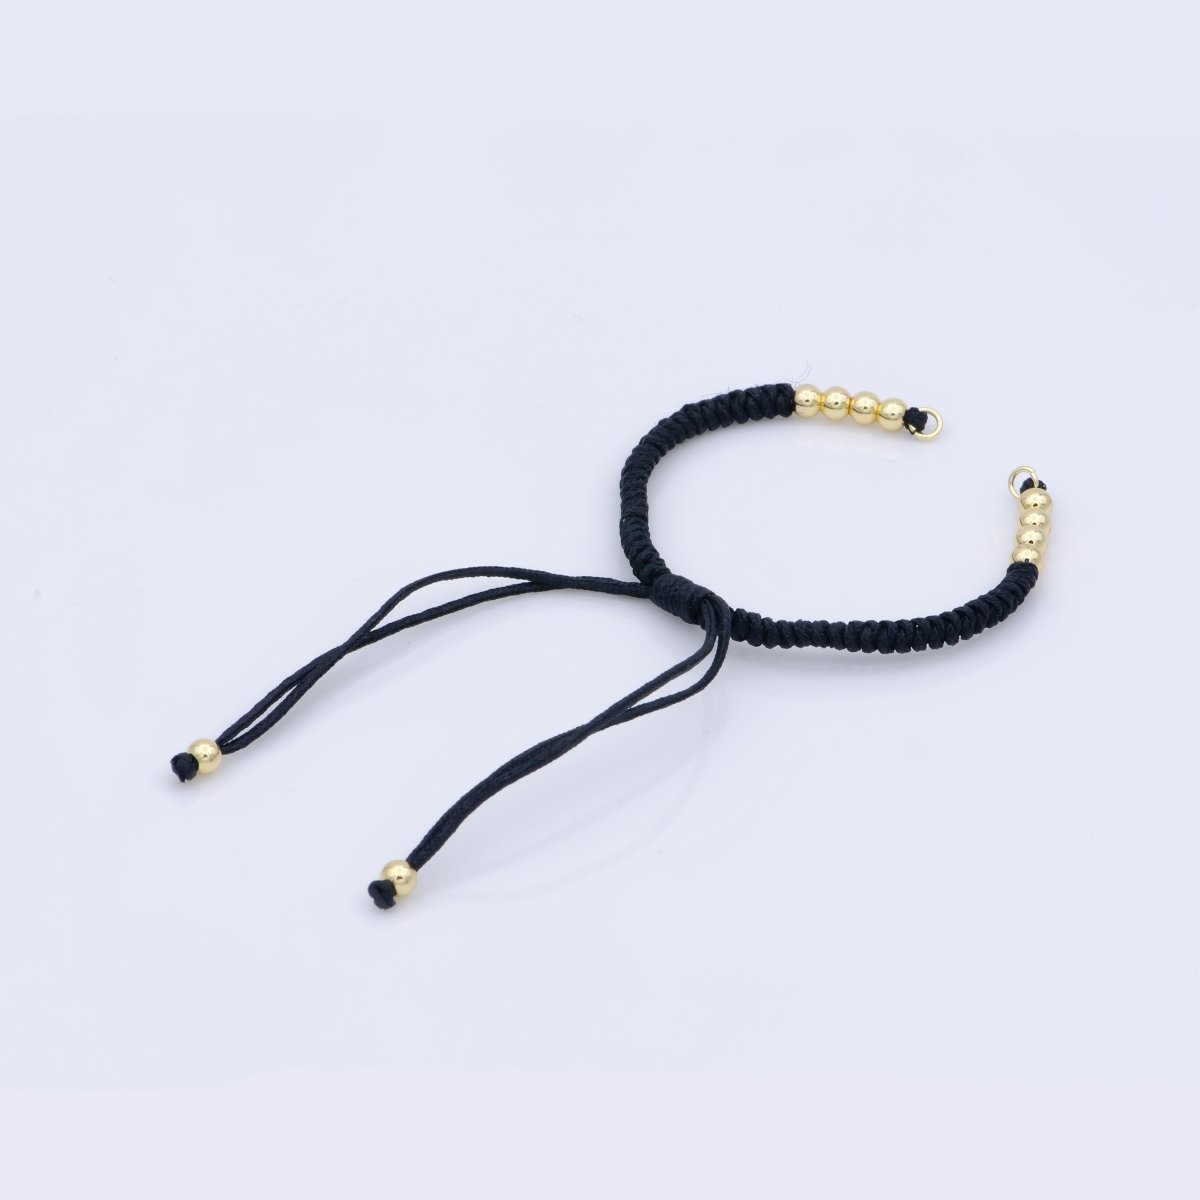 3.8mm Beaded Semi-Finished Black Cotton Fabric Adjustable Bracelet Jewelry Making Supply L-469 - DLUXCA